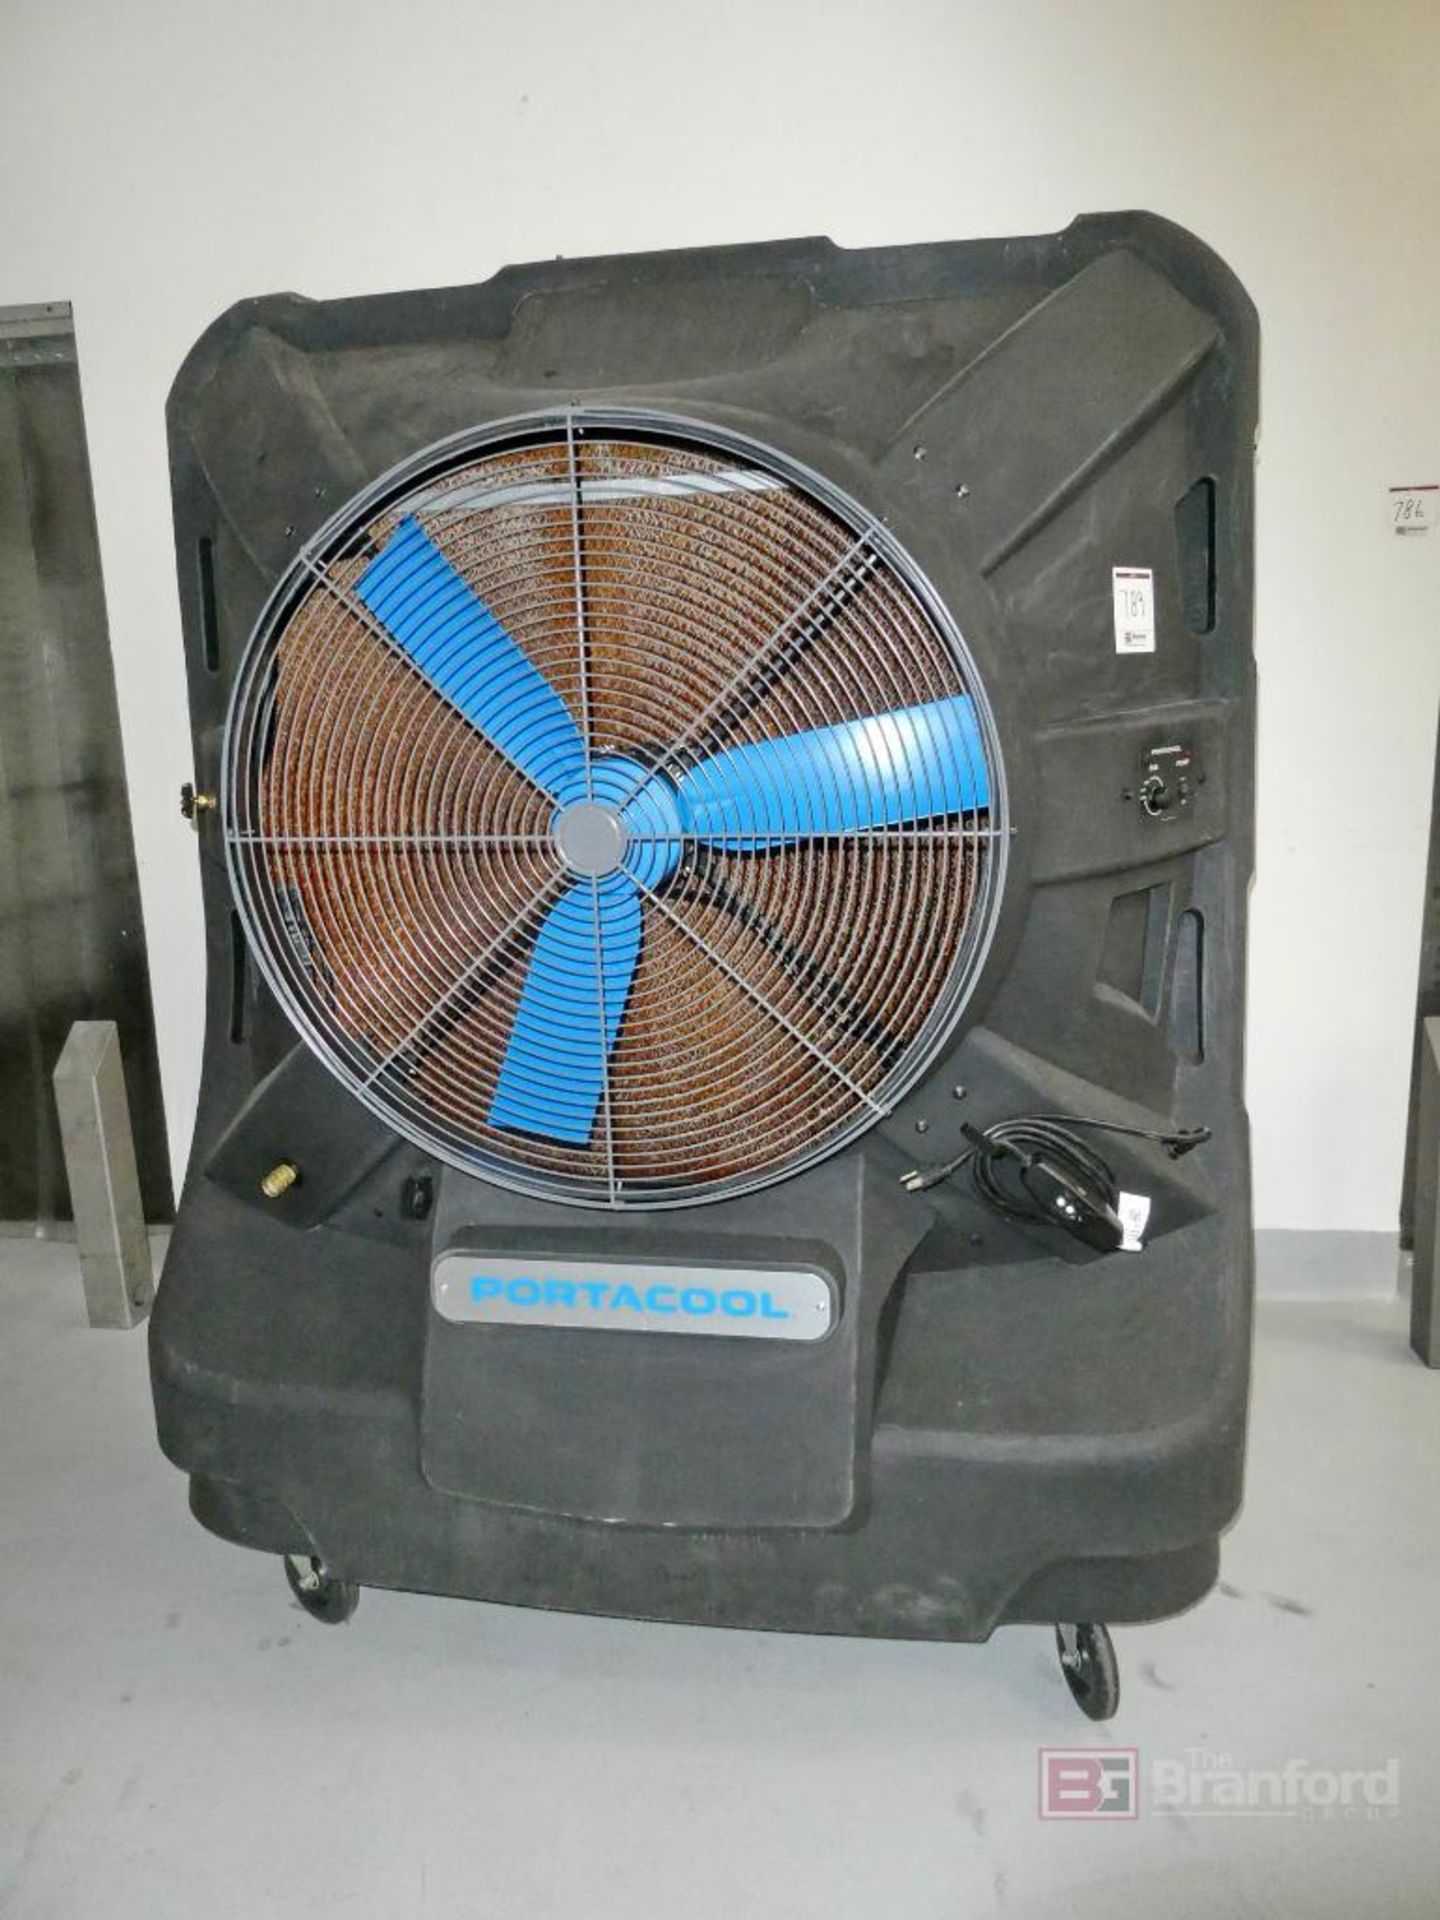 PortaCool Jetstream 260, Portable 36" Variable Speed Evaporative Cooler